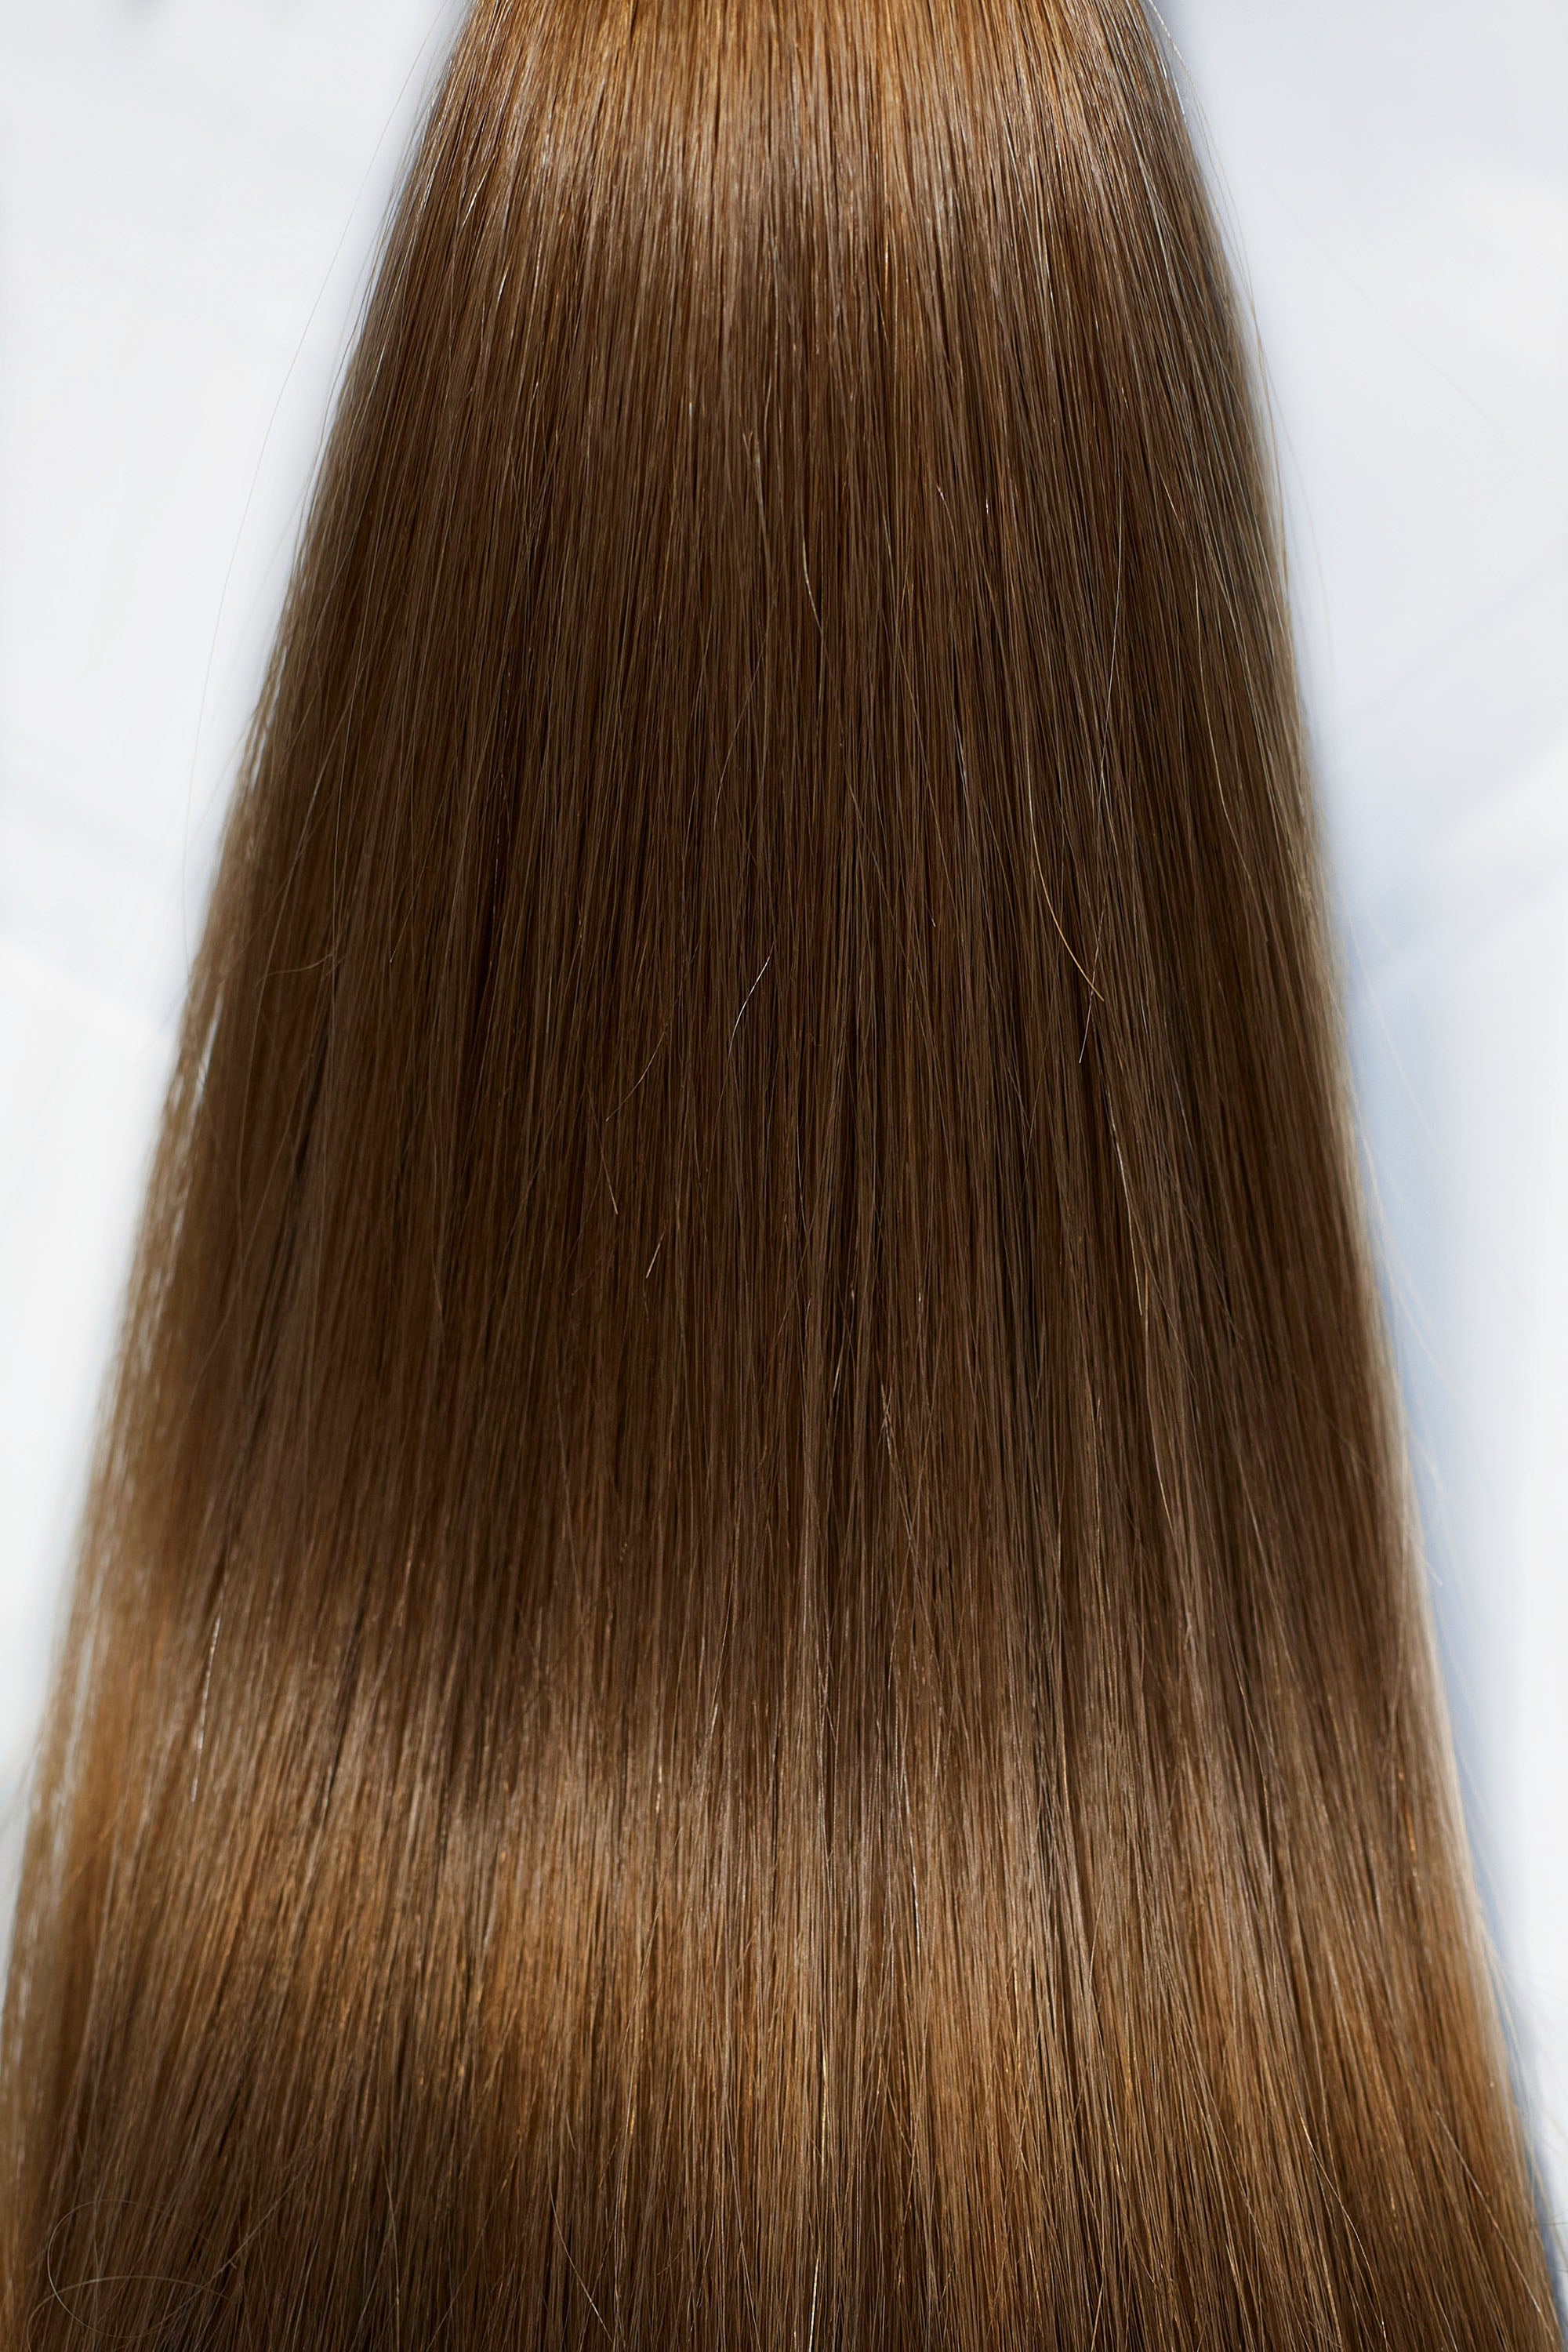 Behair professional Keratin Tip "Premium" 20" (50cm) Natural Straight Chestnut #6 - 25g (1g each pcs) hair extensions